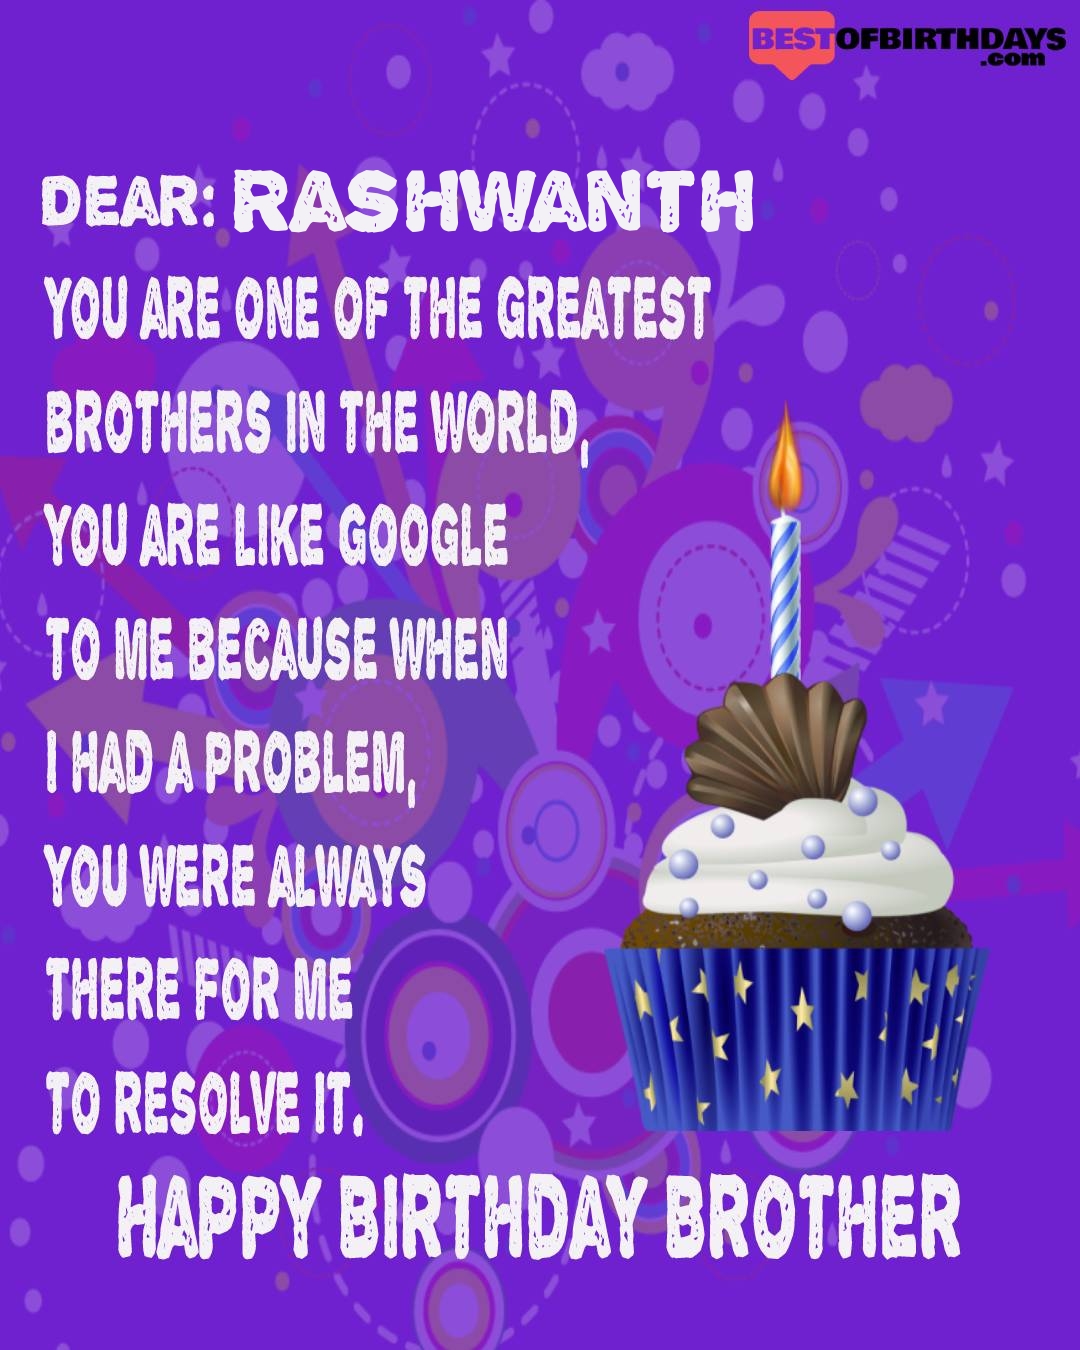 Happy birthday rashwanth bhai brother bro